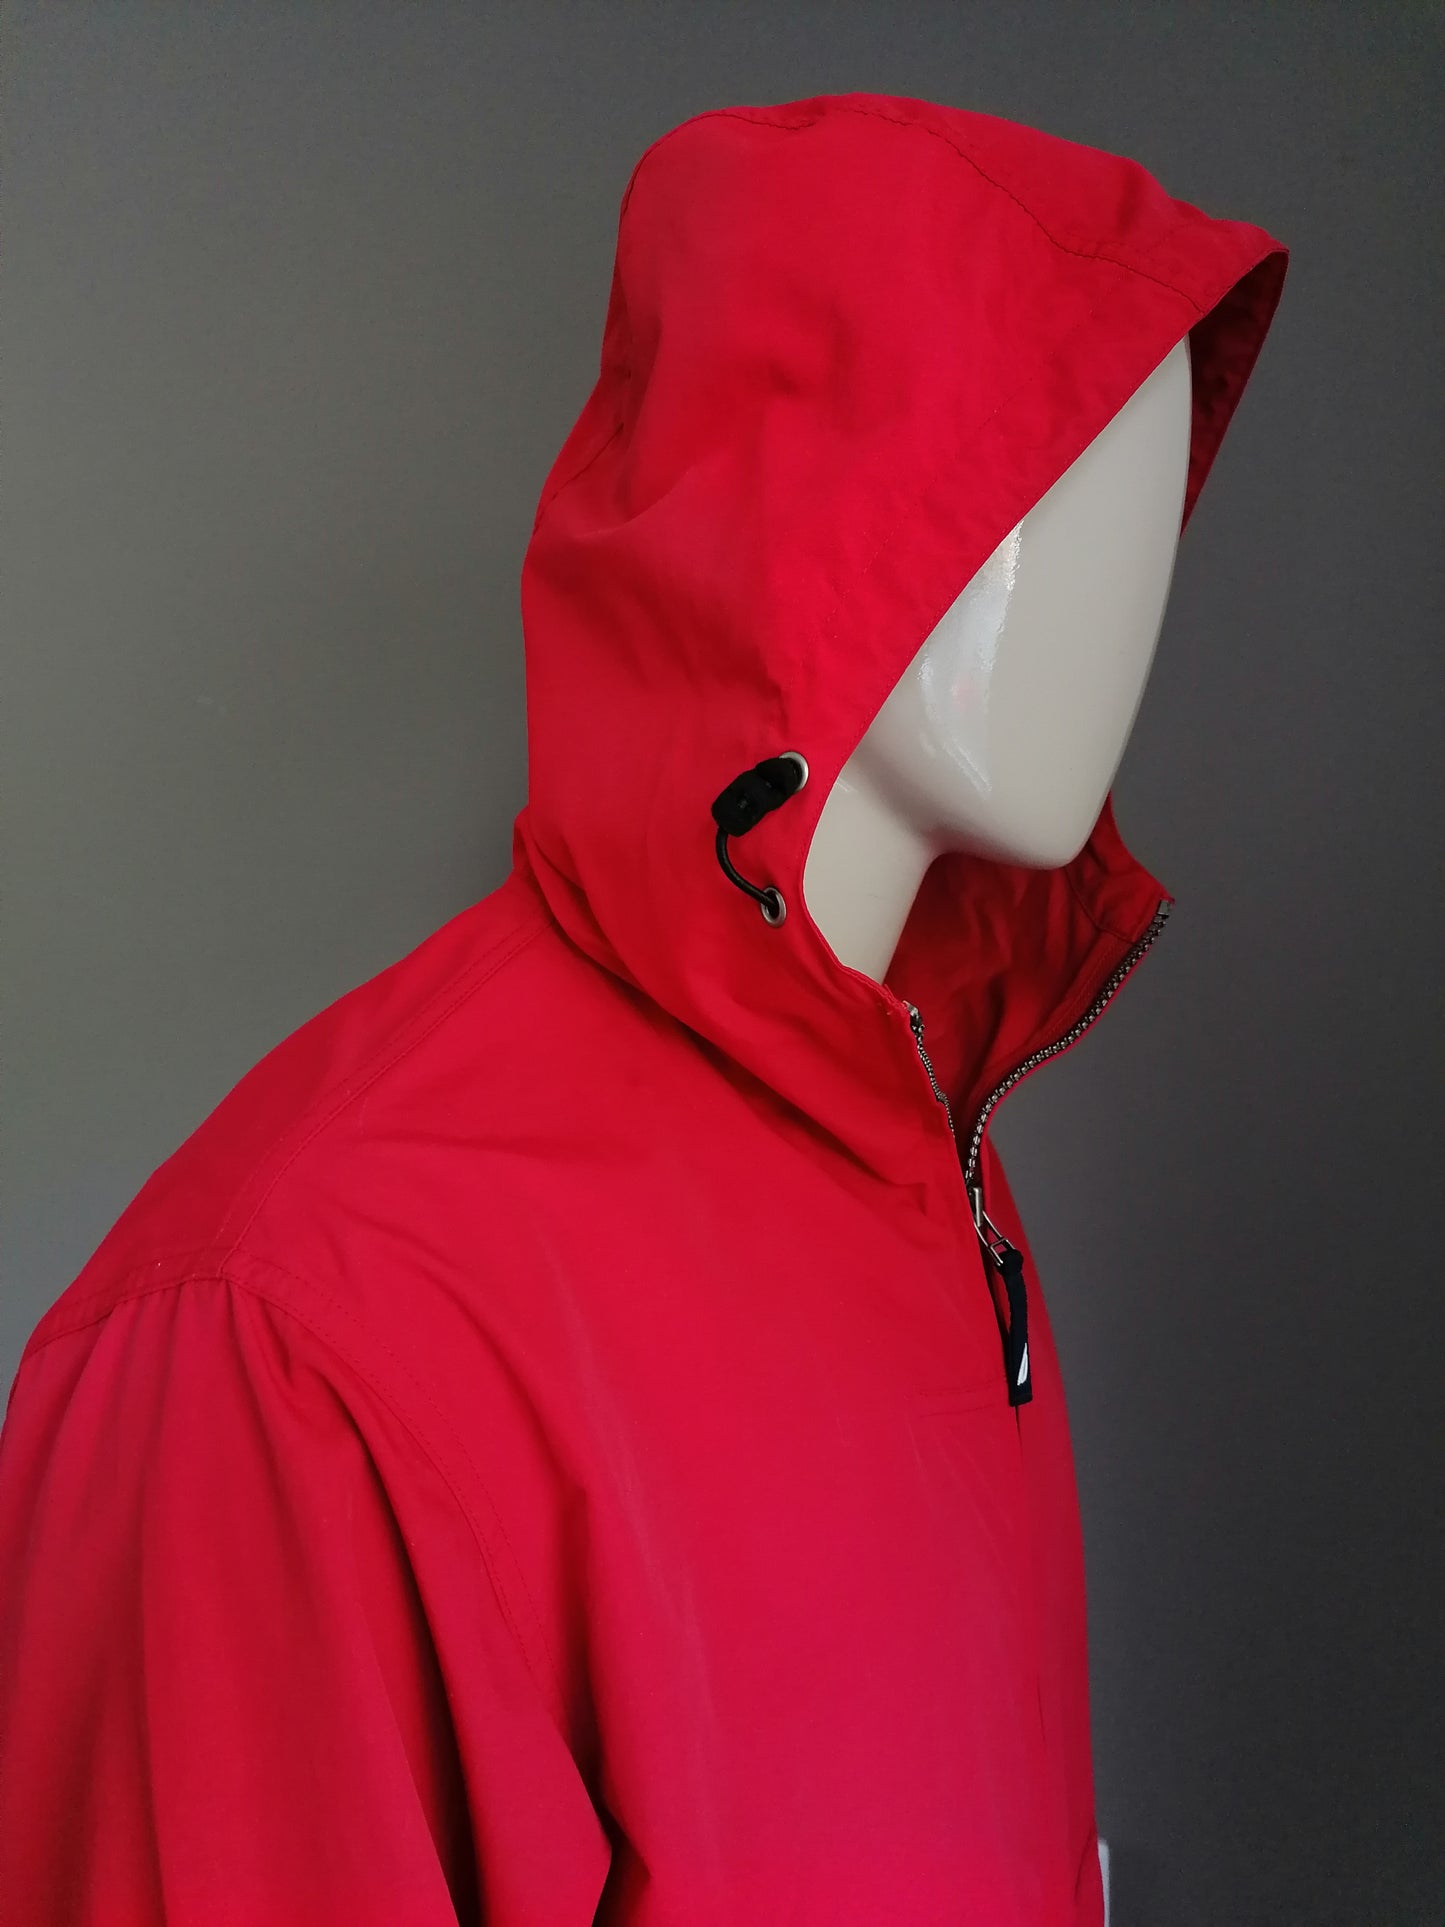 Vintage Nylon Nautica Boy Scout Summer Jack/Jacket. Colored red. Size M / L.